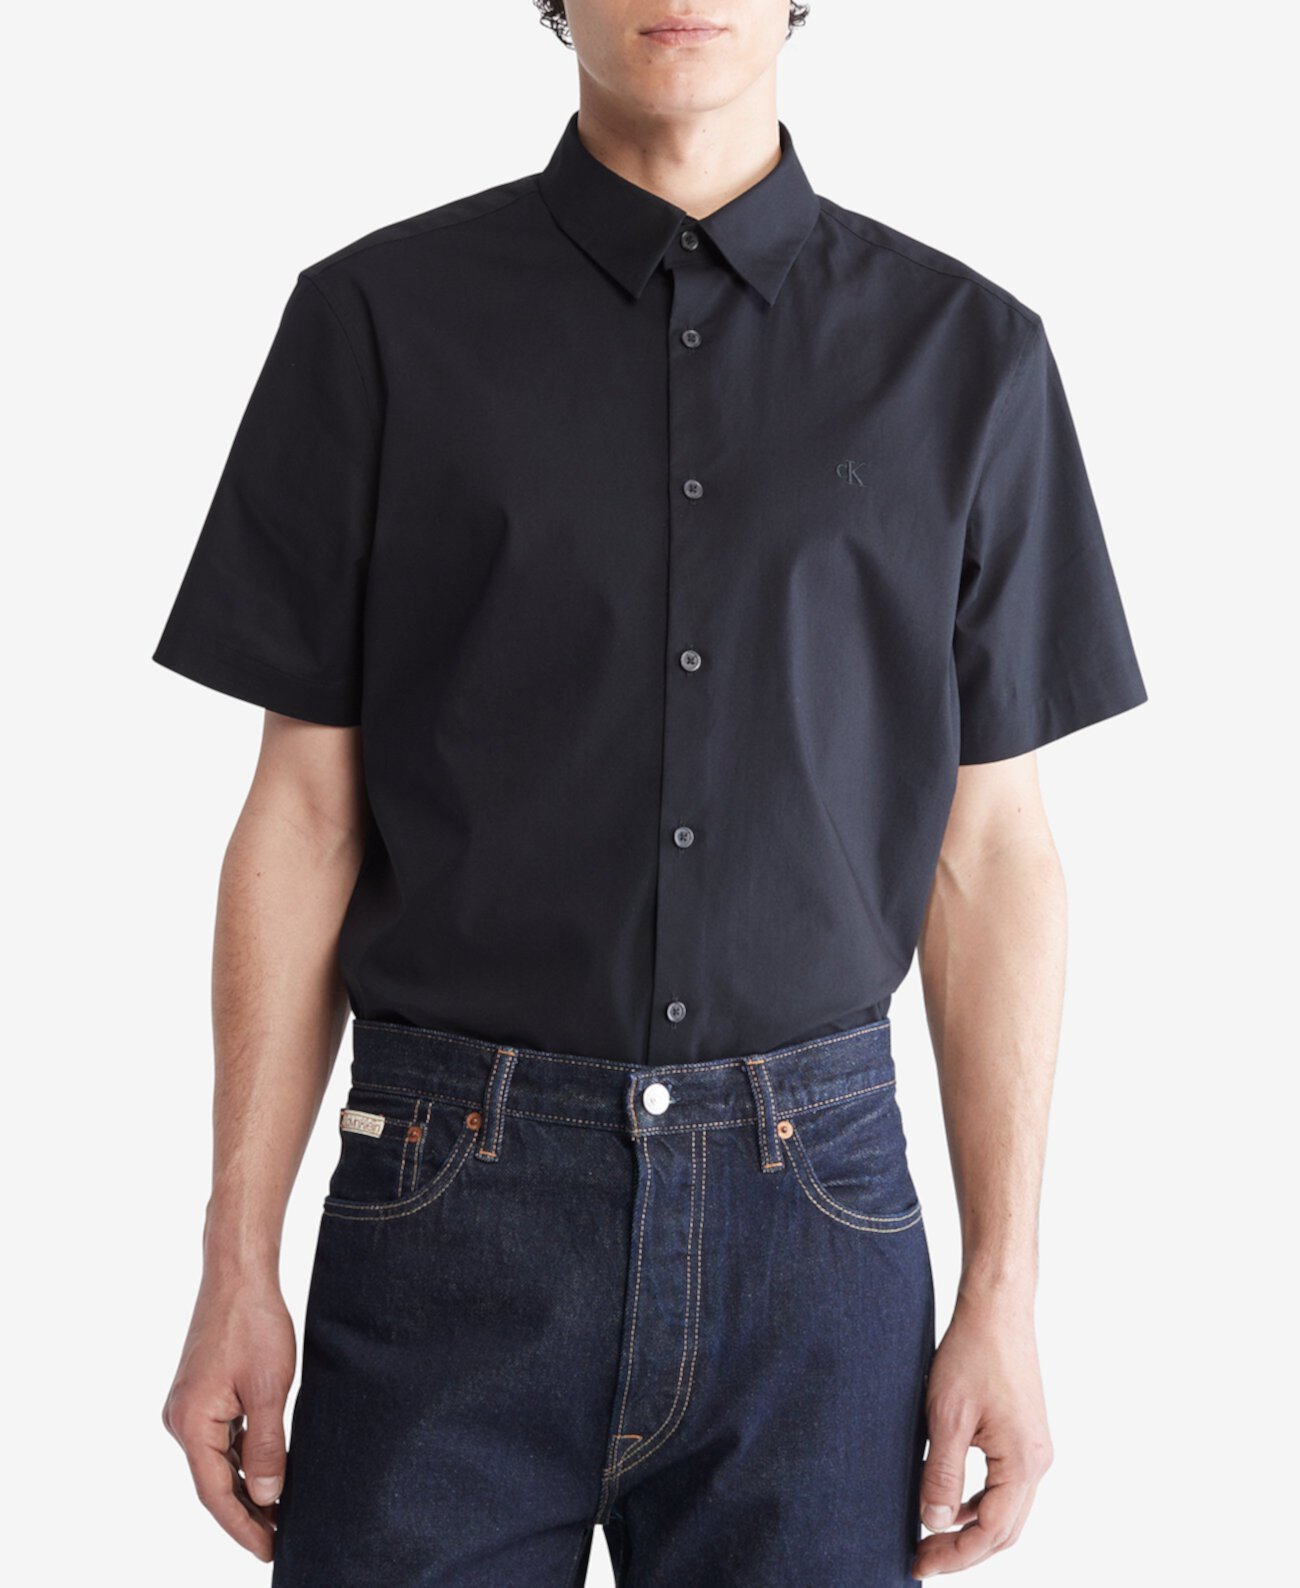 Мужская рубашка Slim-Fit Stretch Solid Calvin Klein